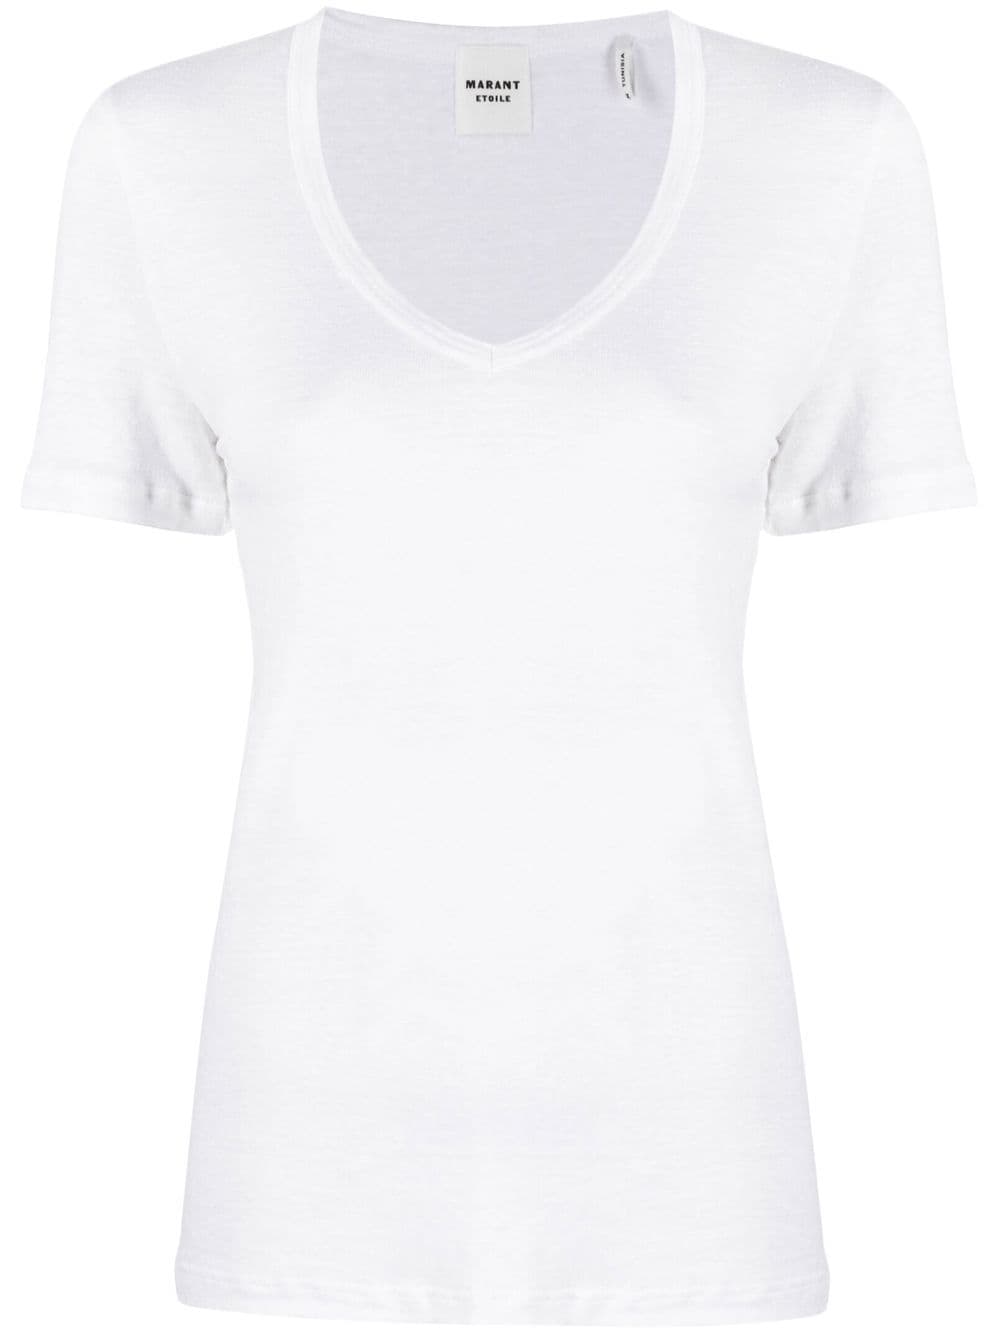 MARANT ÉTOILE scoop-neck short-sleeve T-shirt - White von MARANT ÉTOILE